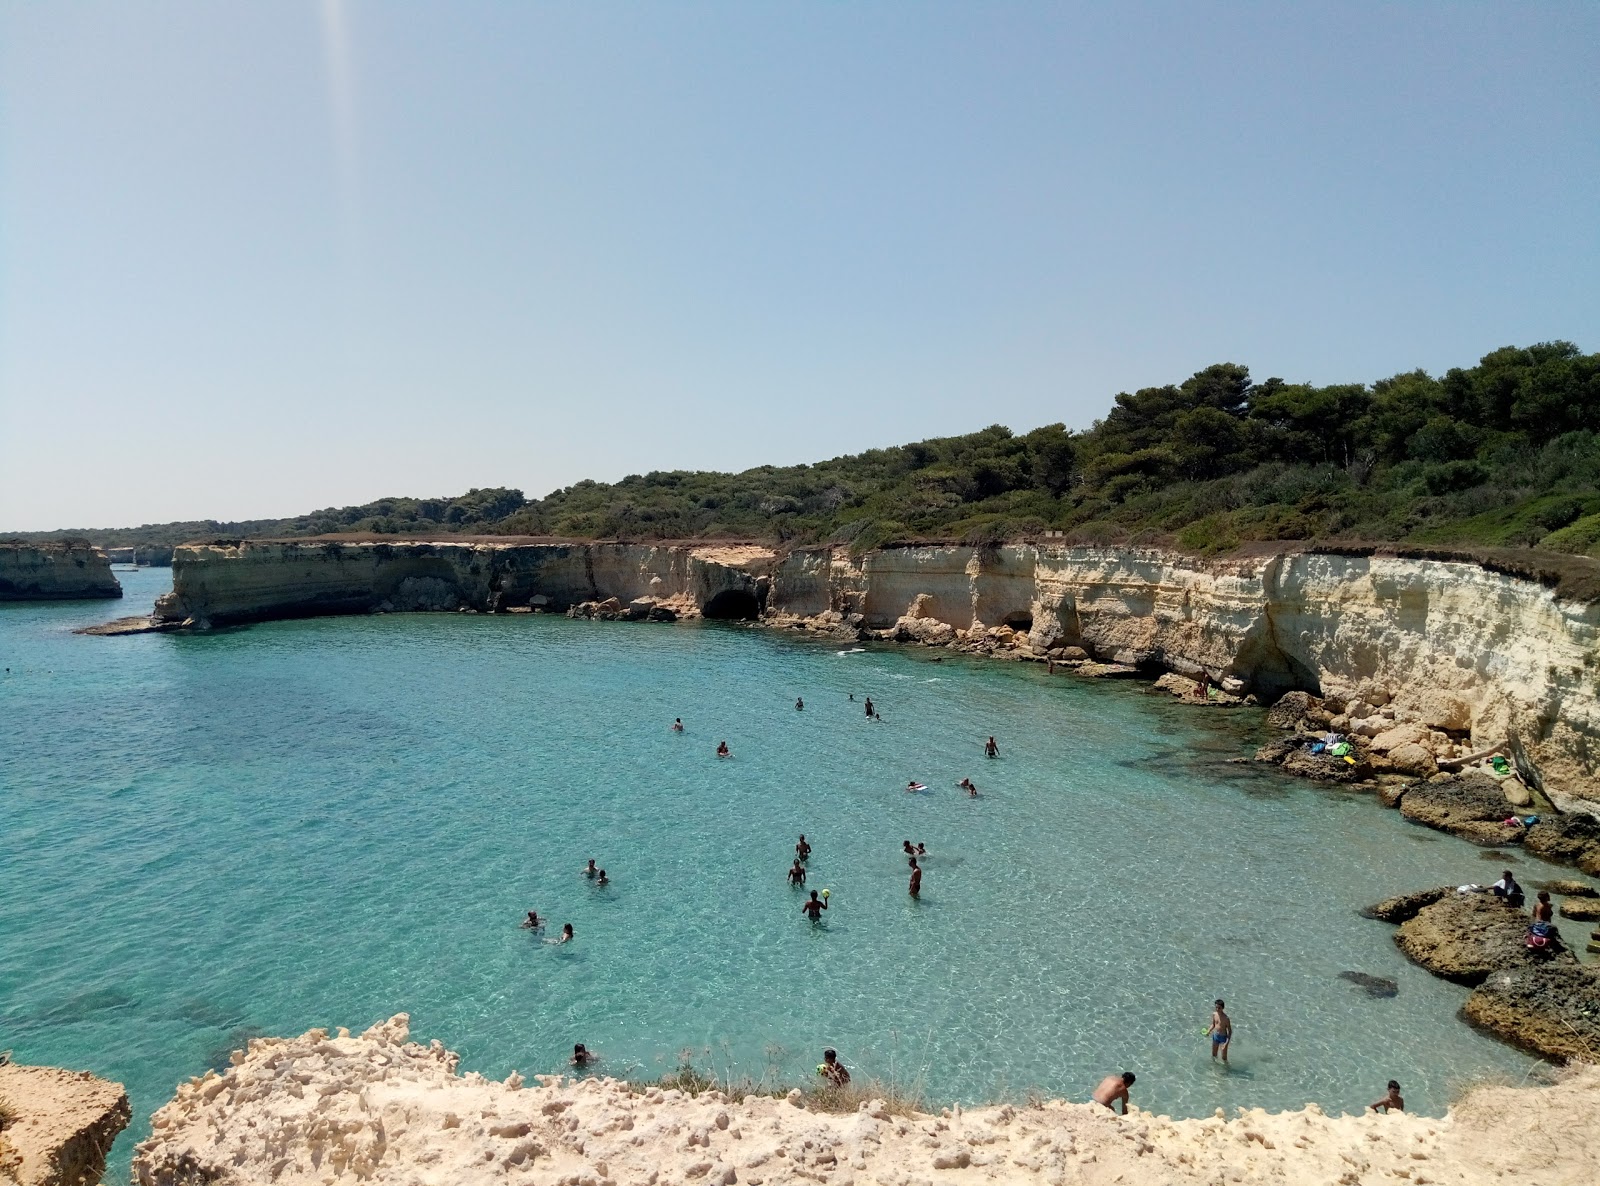 Fotografija Spiaggia della Punticeddha z modra čista voda površino